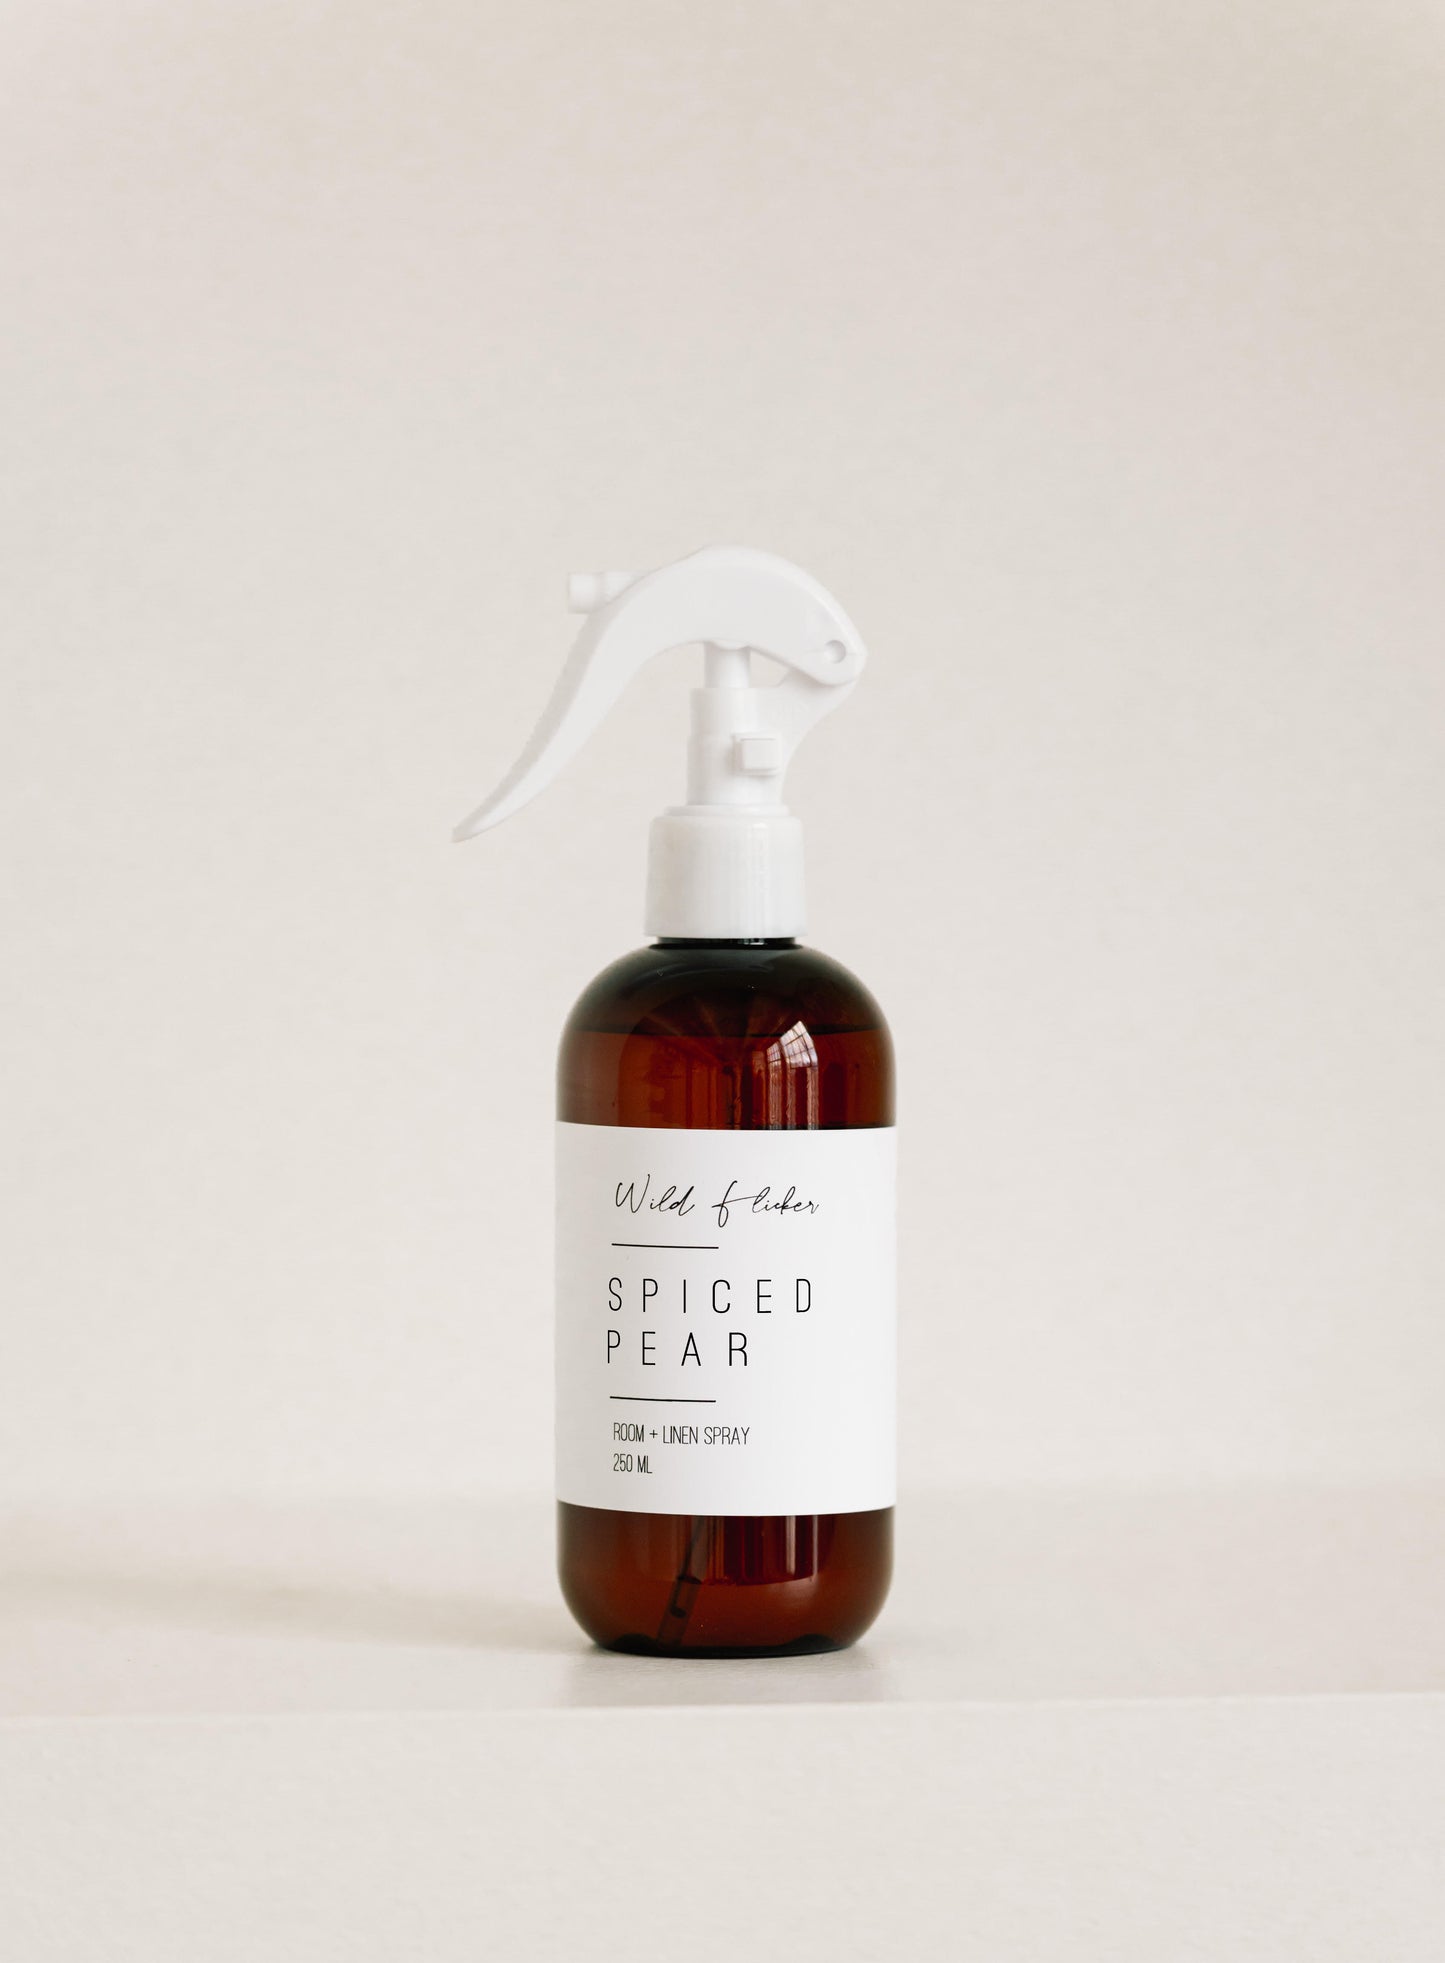 Spiced Pear Room + Linen Spray